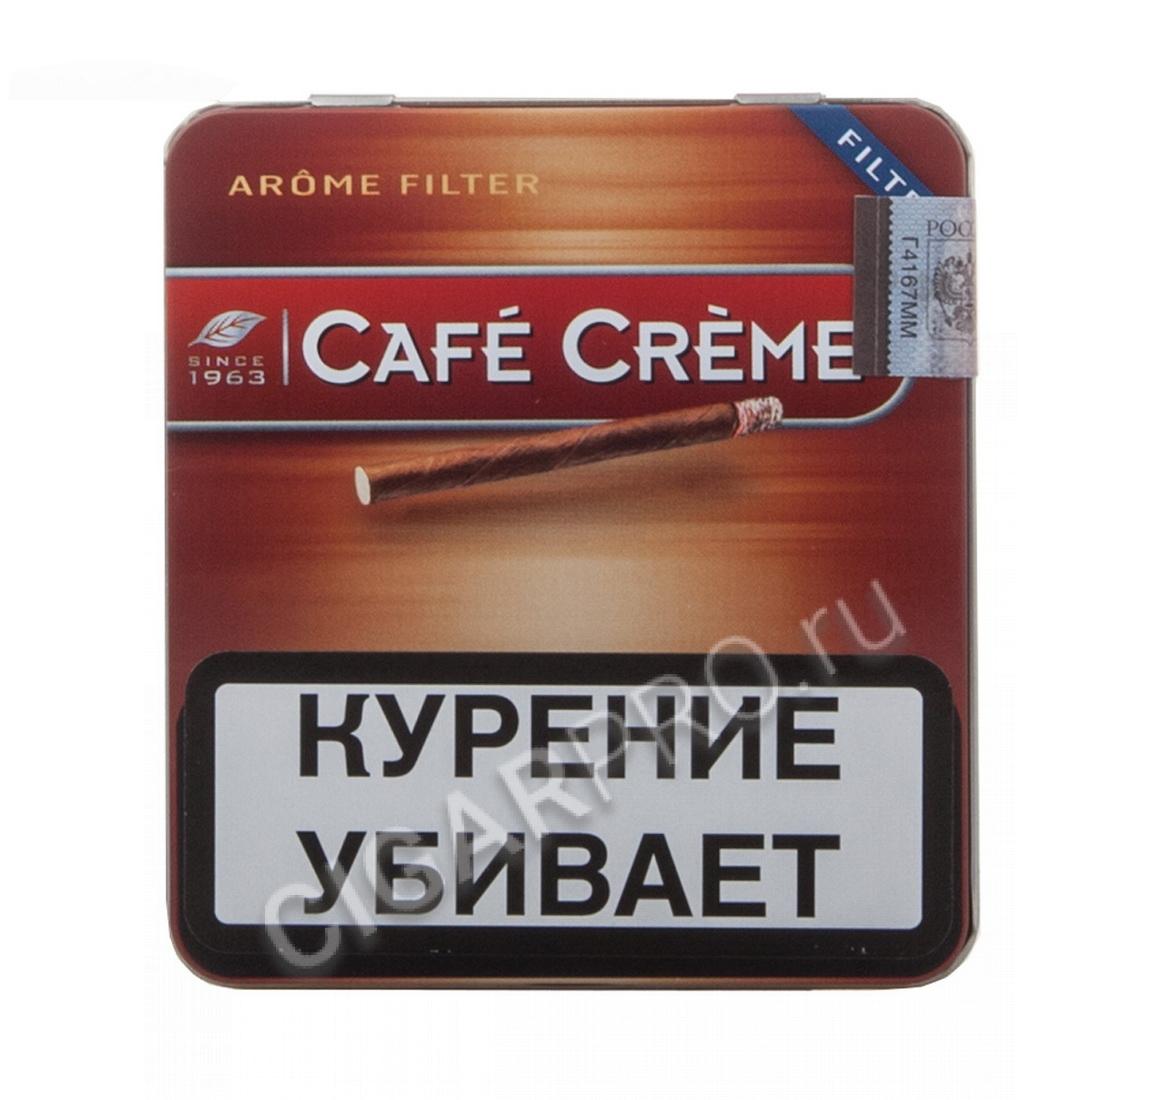 Сигарпро. Сигариллы Cafe Creme Blue 10. Сигариллы Cafe Creme Filter Caramel Cream. Сигариллы Cafe Creme Filter ж/б. Коробка из под сигариллы Cafe Creme Filter железная.